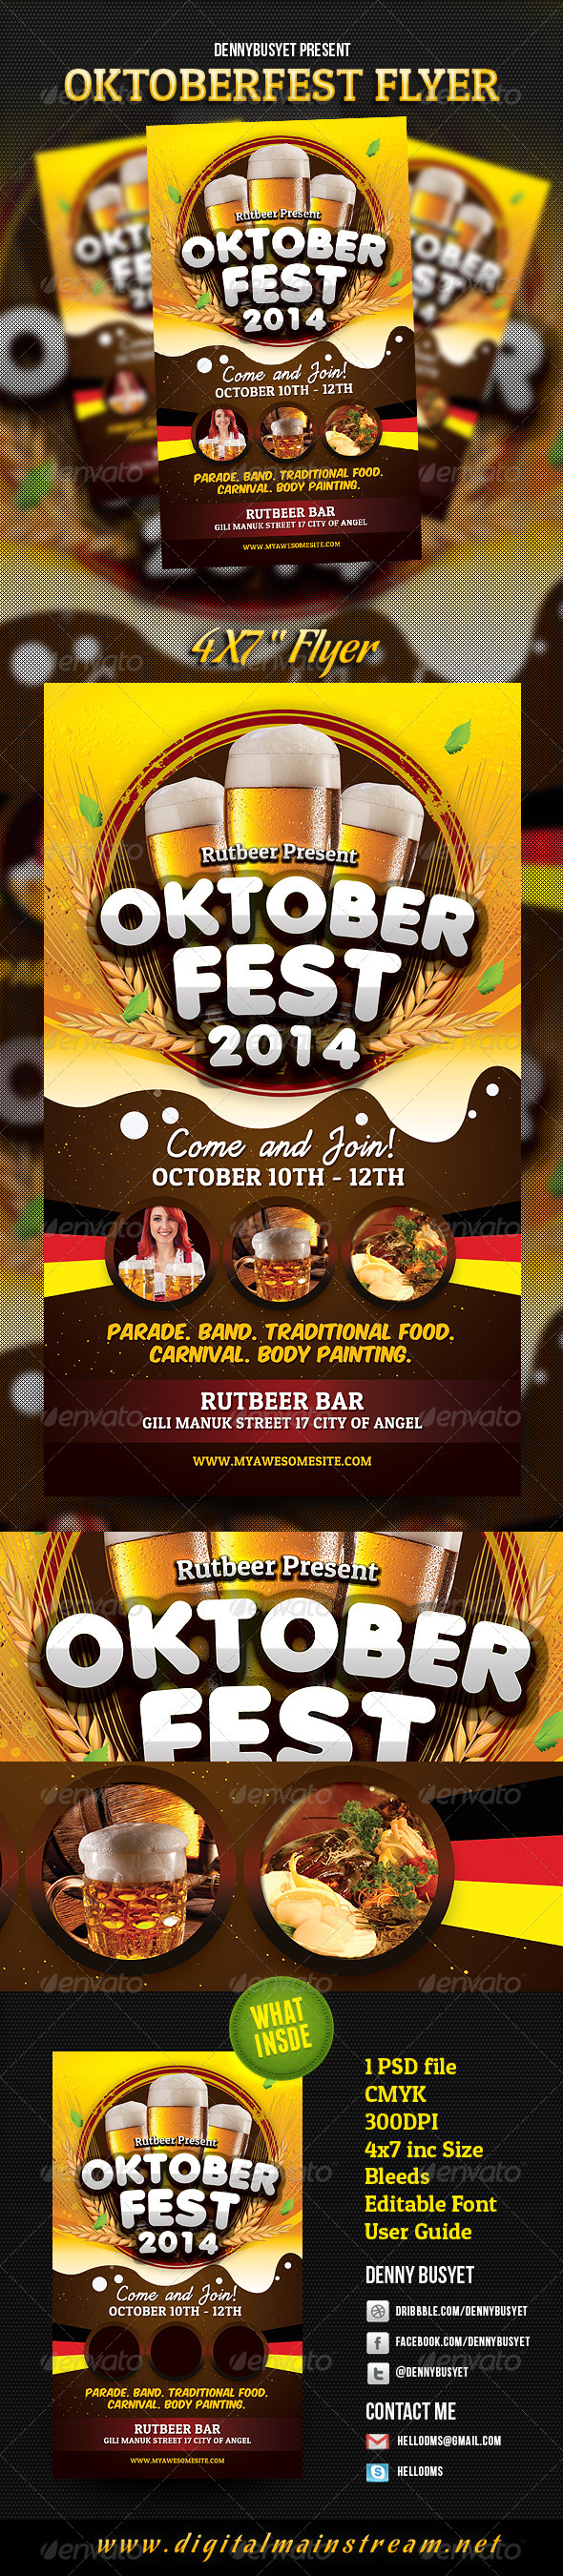 Oktoberfest Flyer Template By Dennybusyet Graphicriver